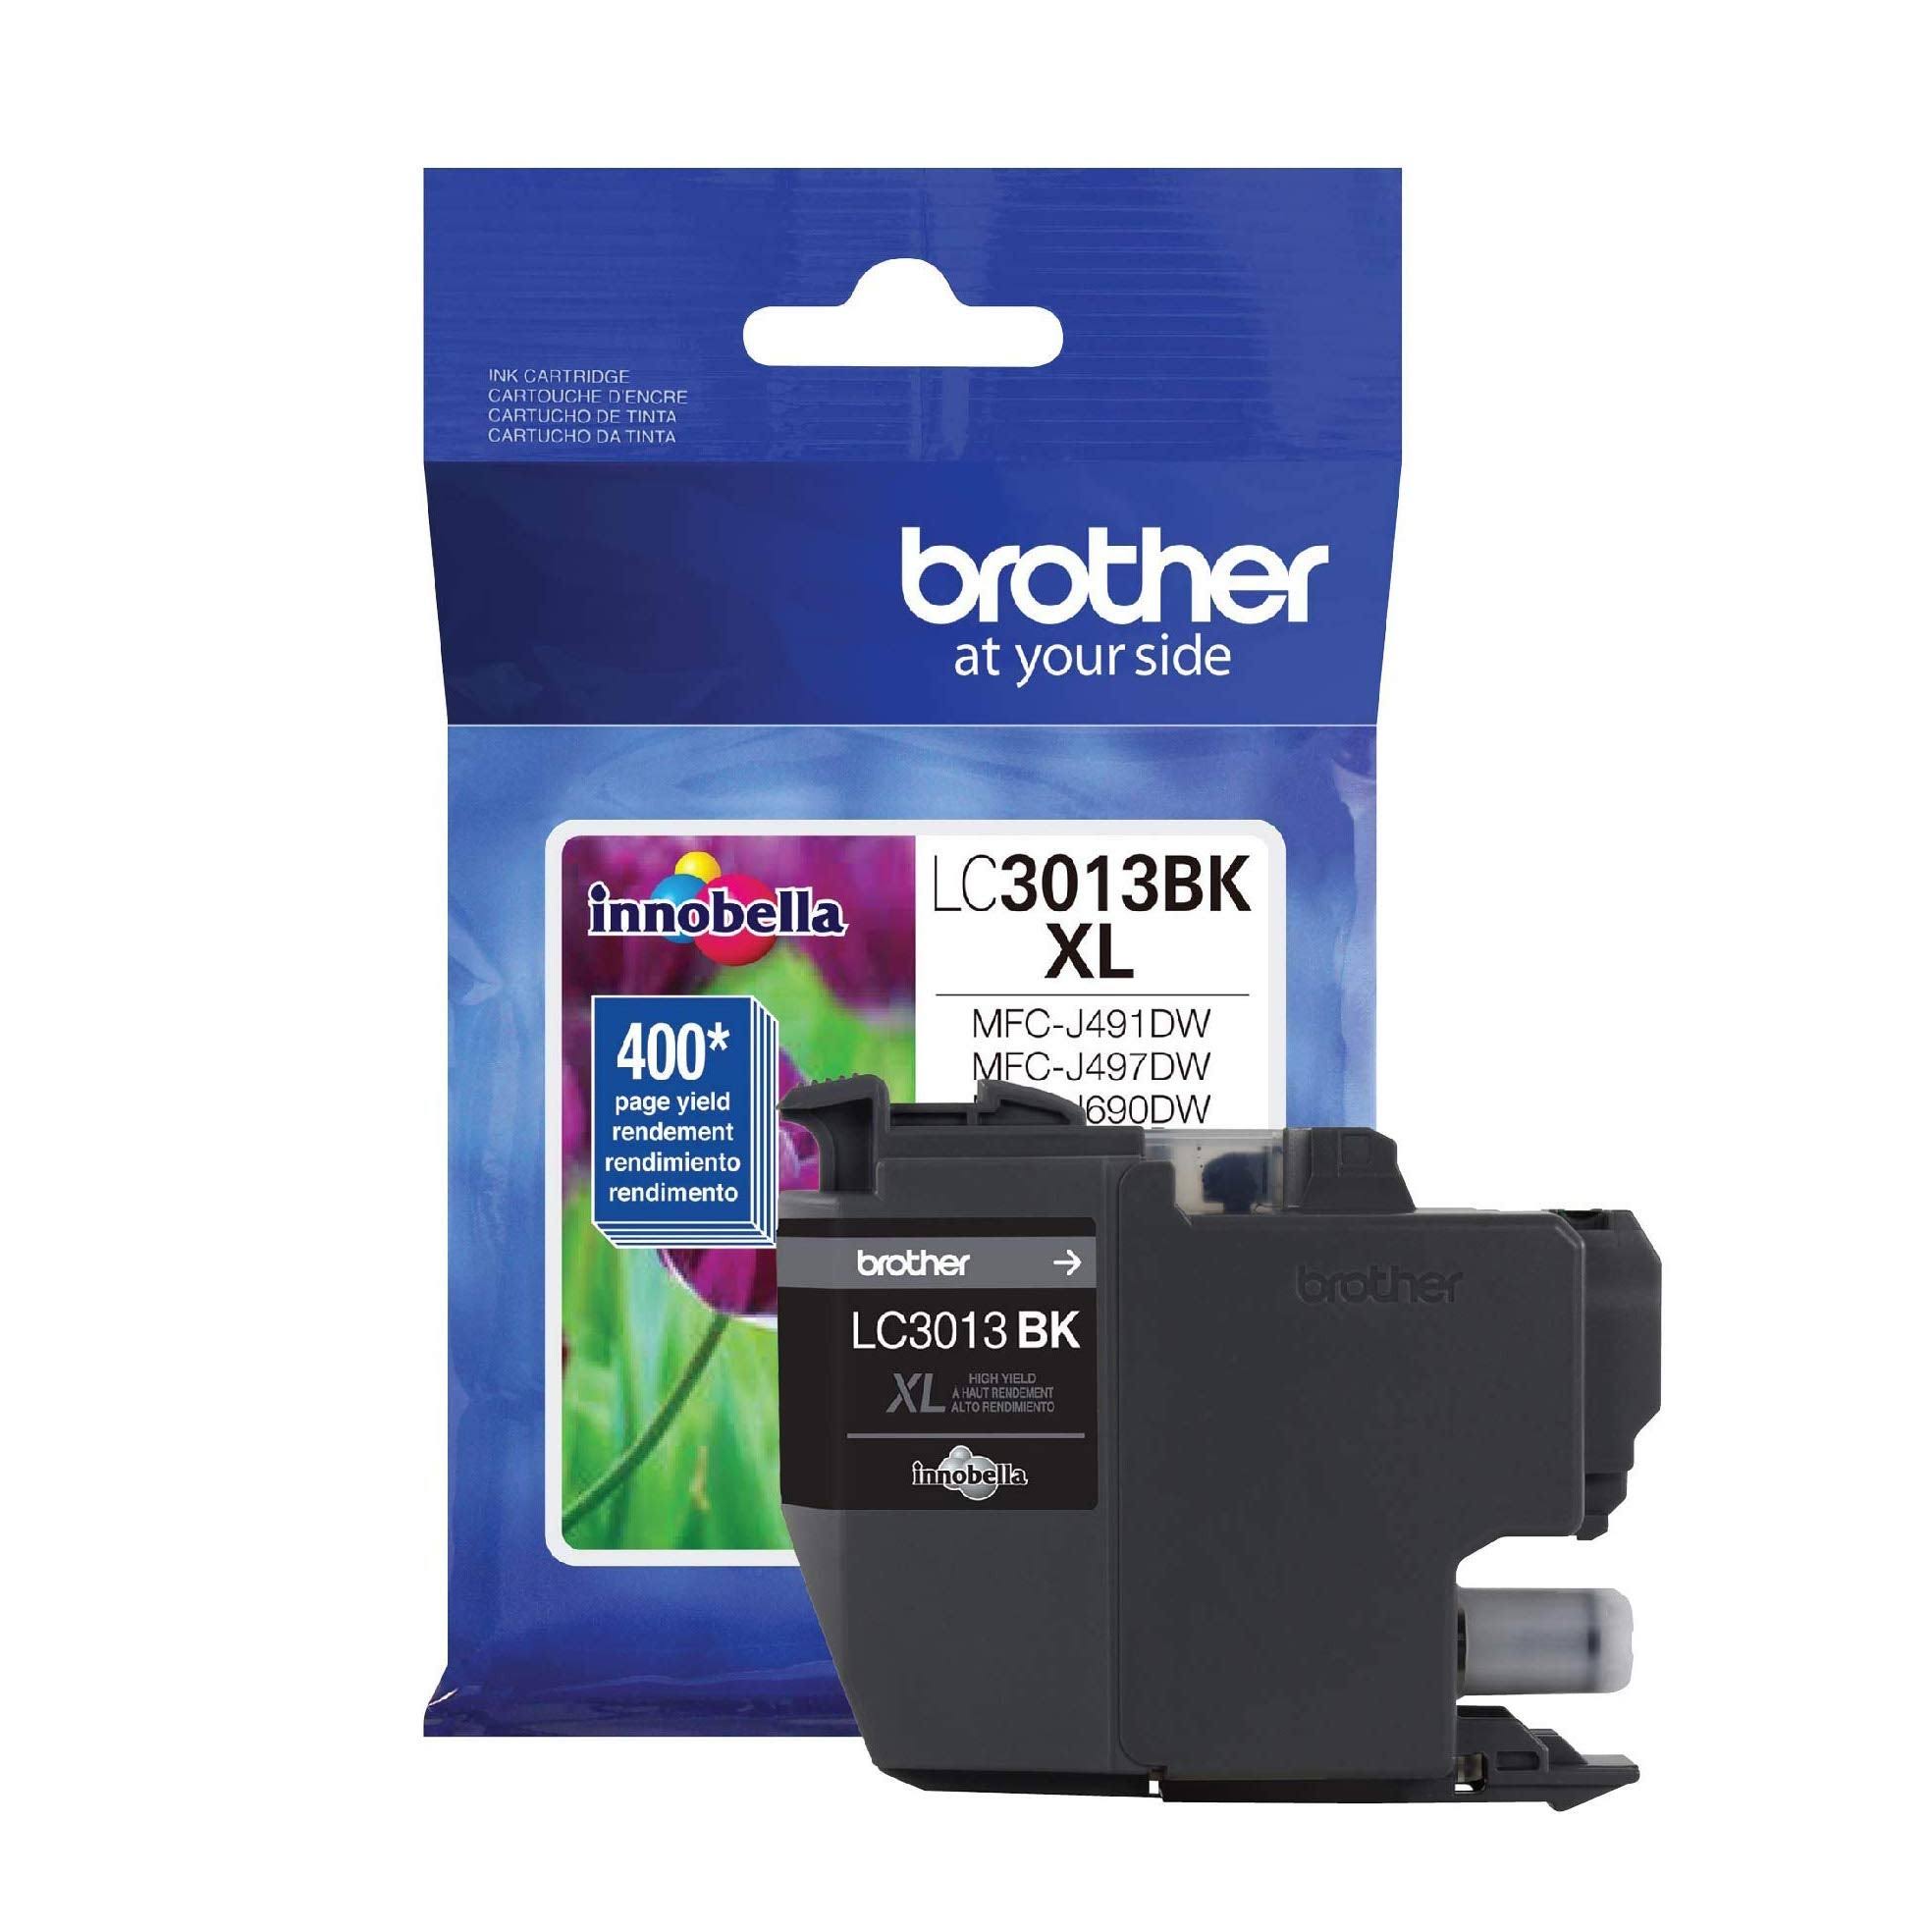 Brother LC3013BK Original Ink Cartridge - Black, Single